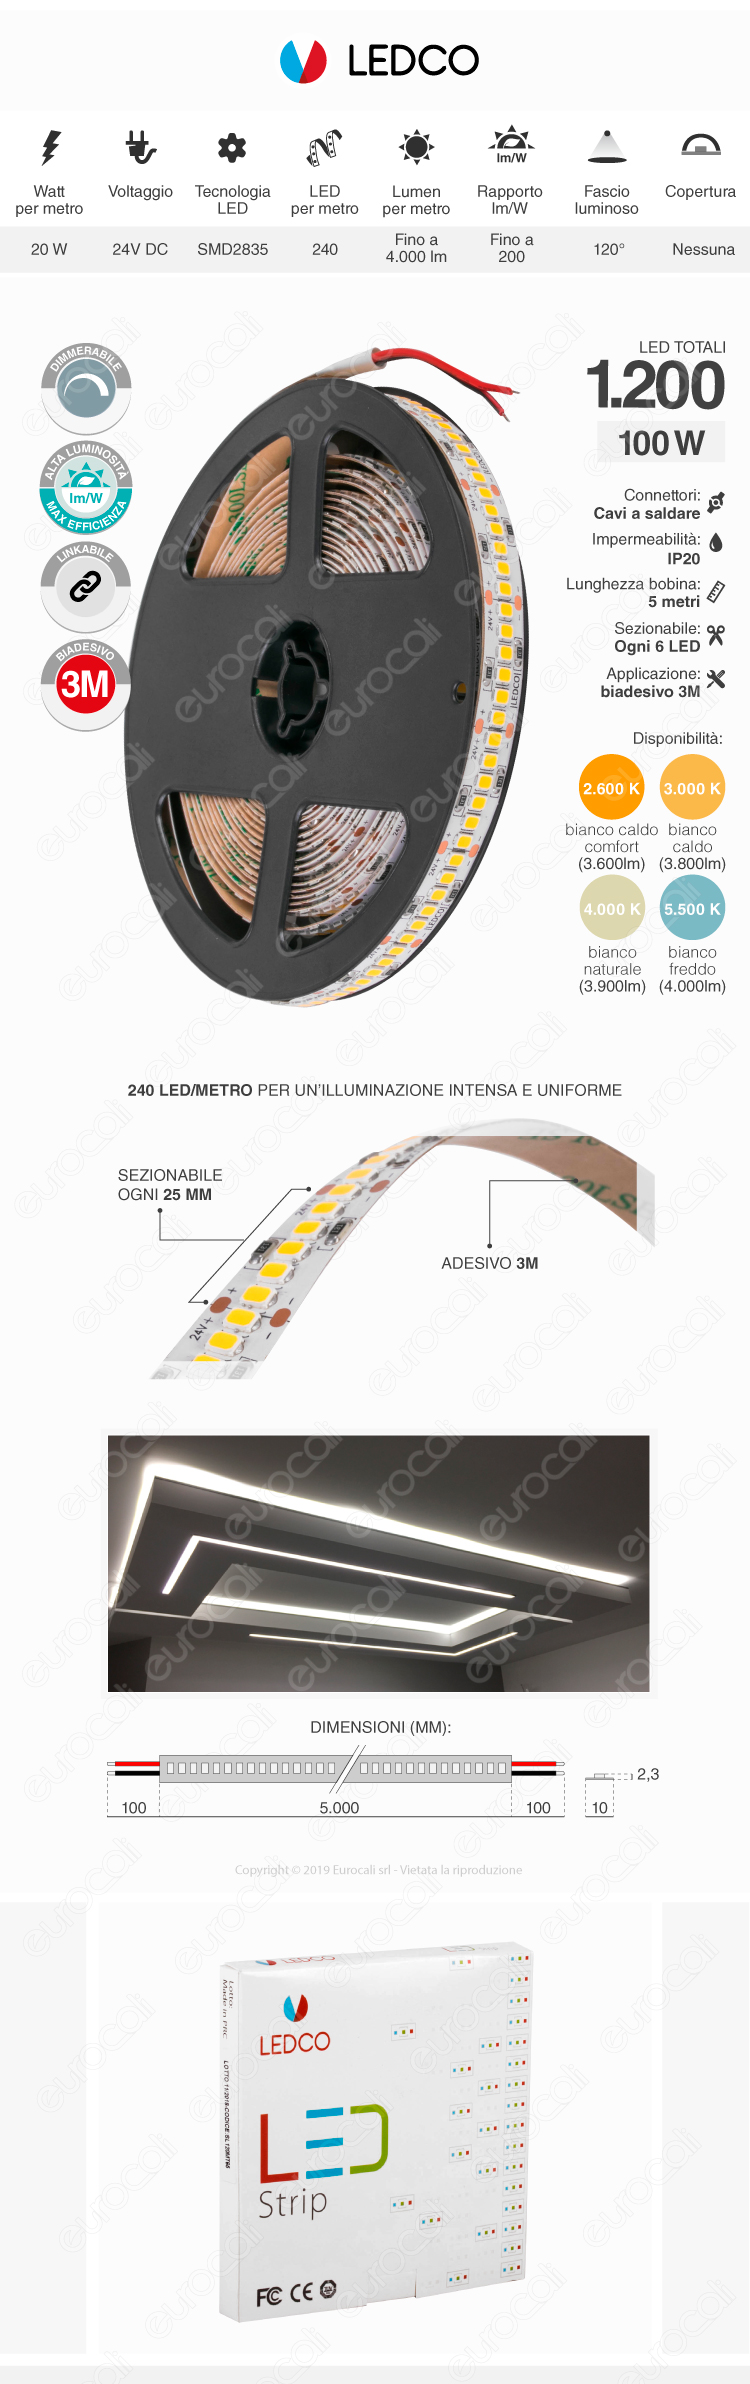 ZNLED Striscia LED 2835 Monocolore 120 LED/metro 24V - Bobina da 30 metri - mod. S411819210 / S411819220